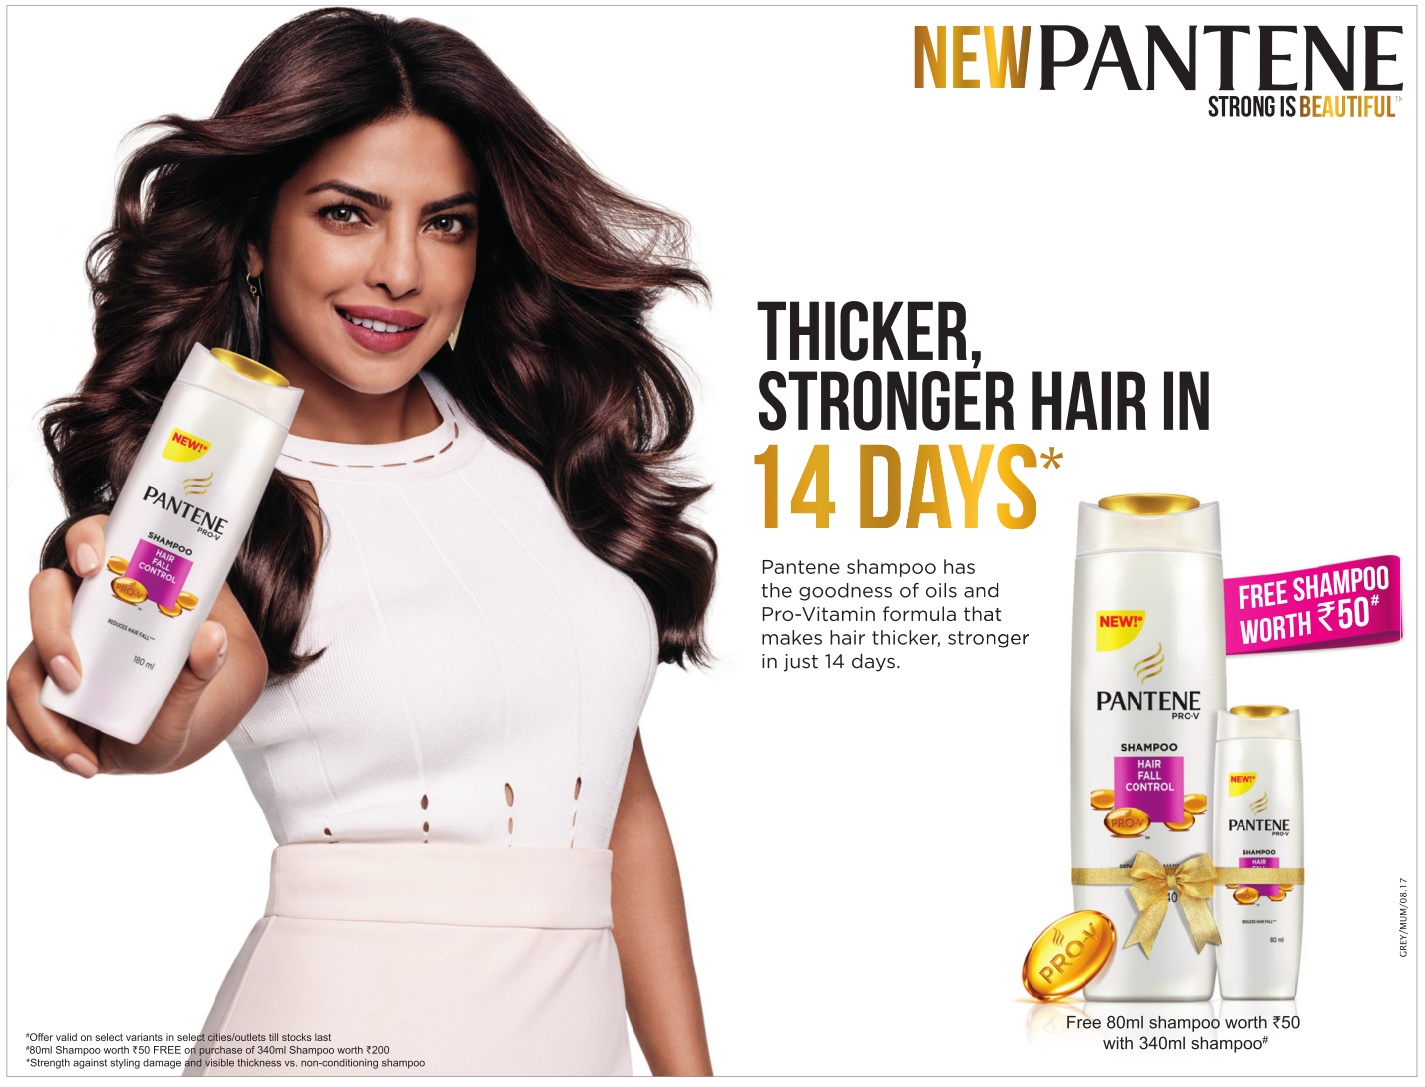 Реклама волосы как в рекламе пантин - 85 фото